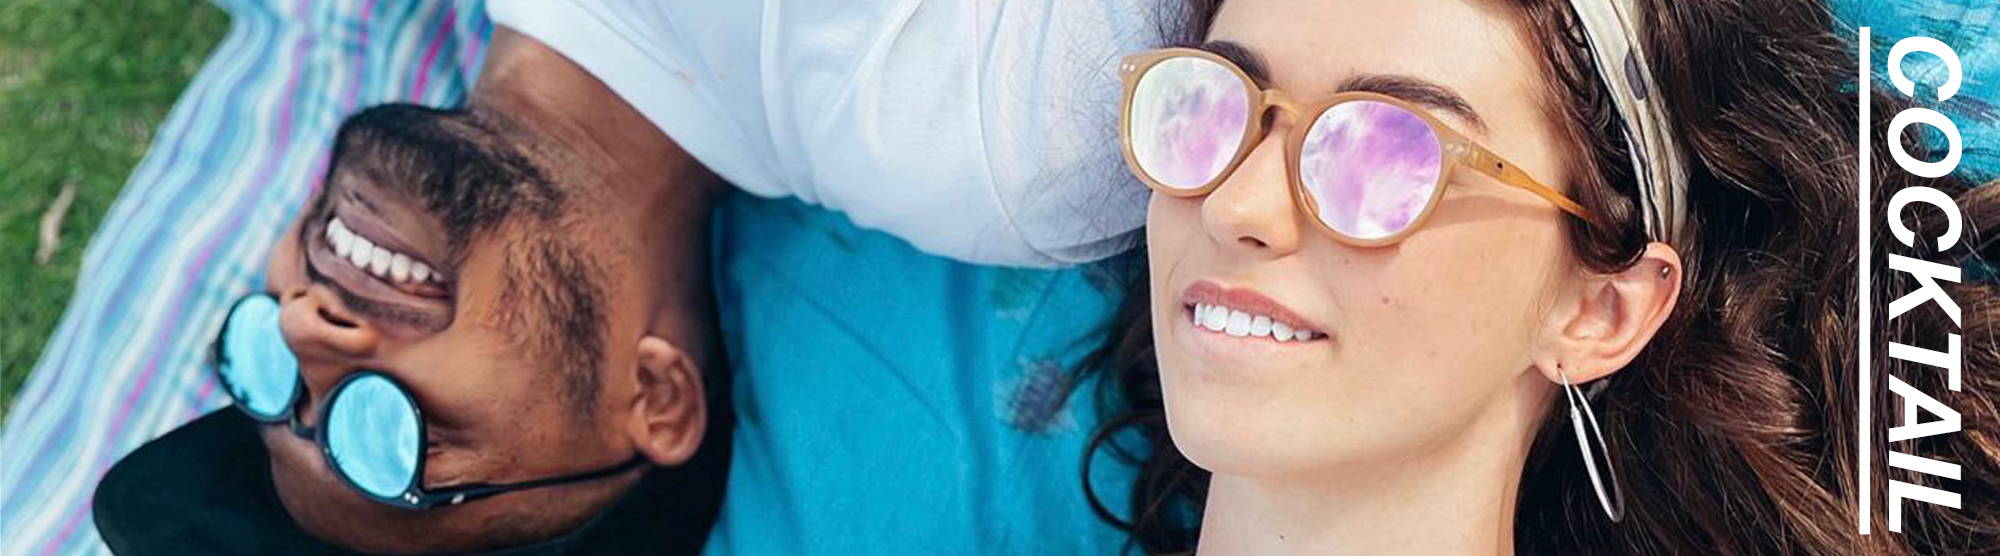 Humps Optics Launches indestructible polarized sunglasses